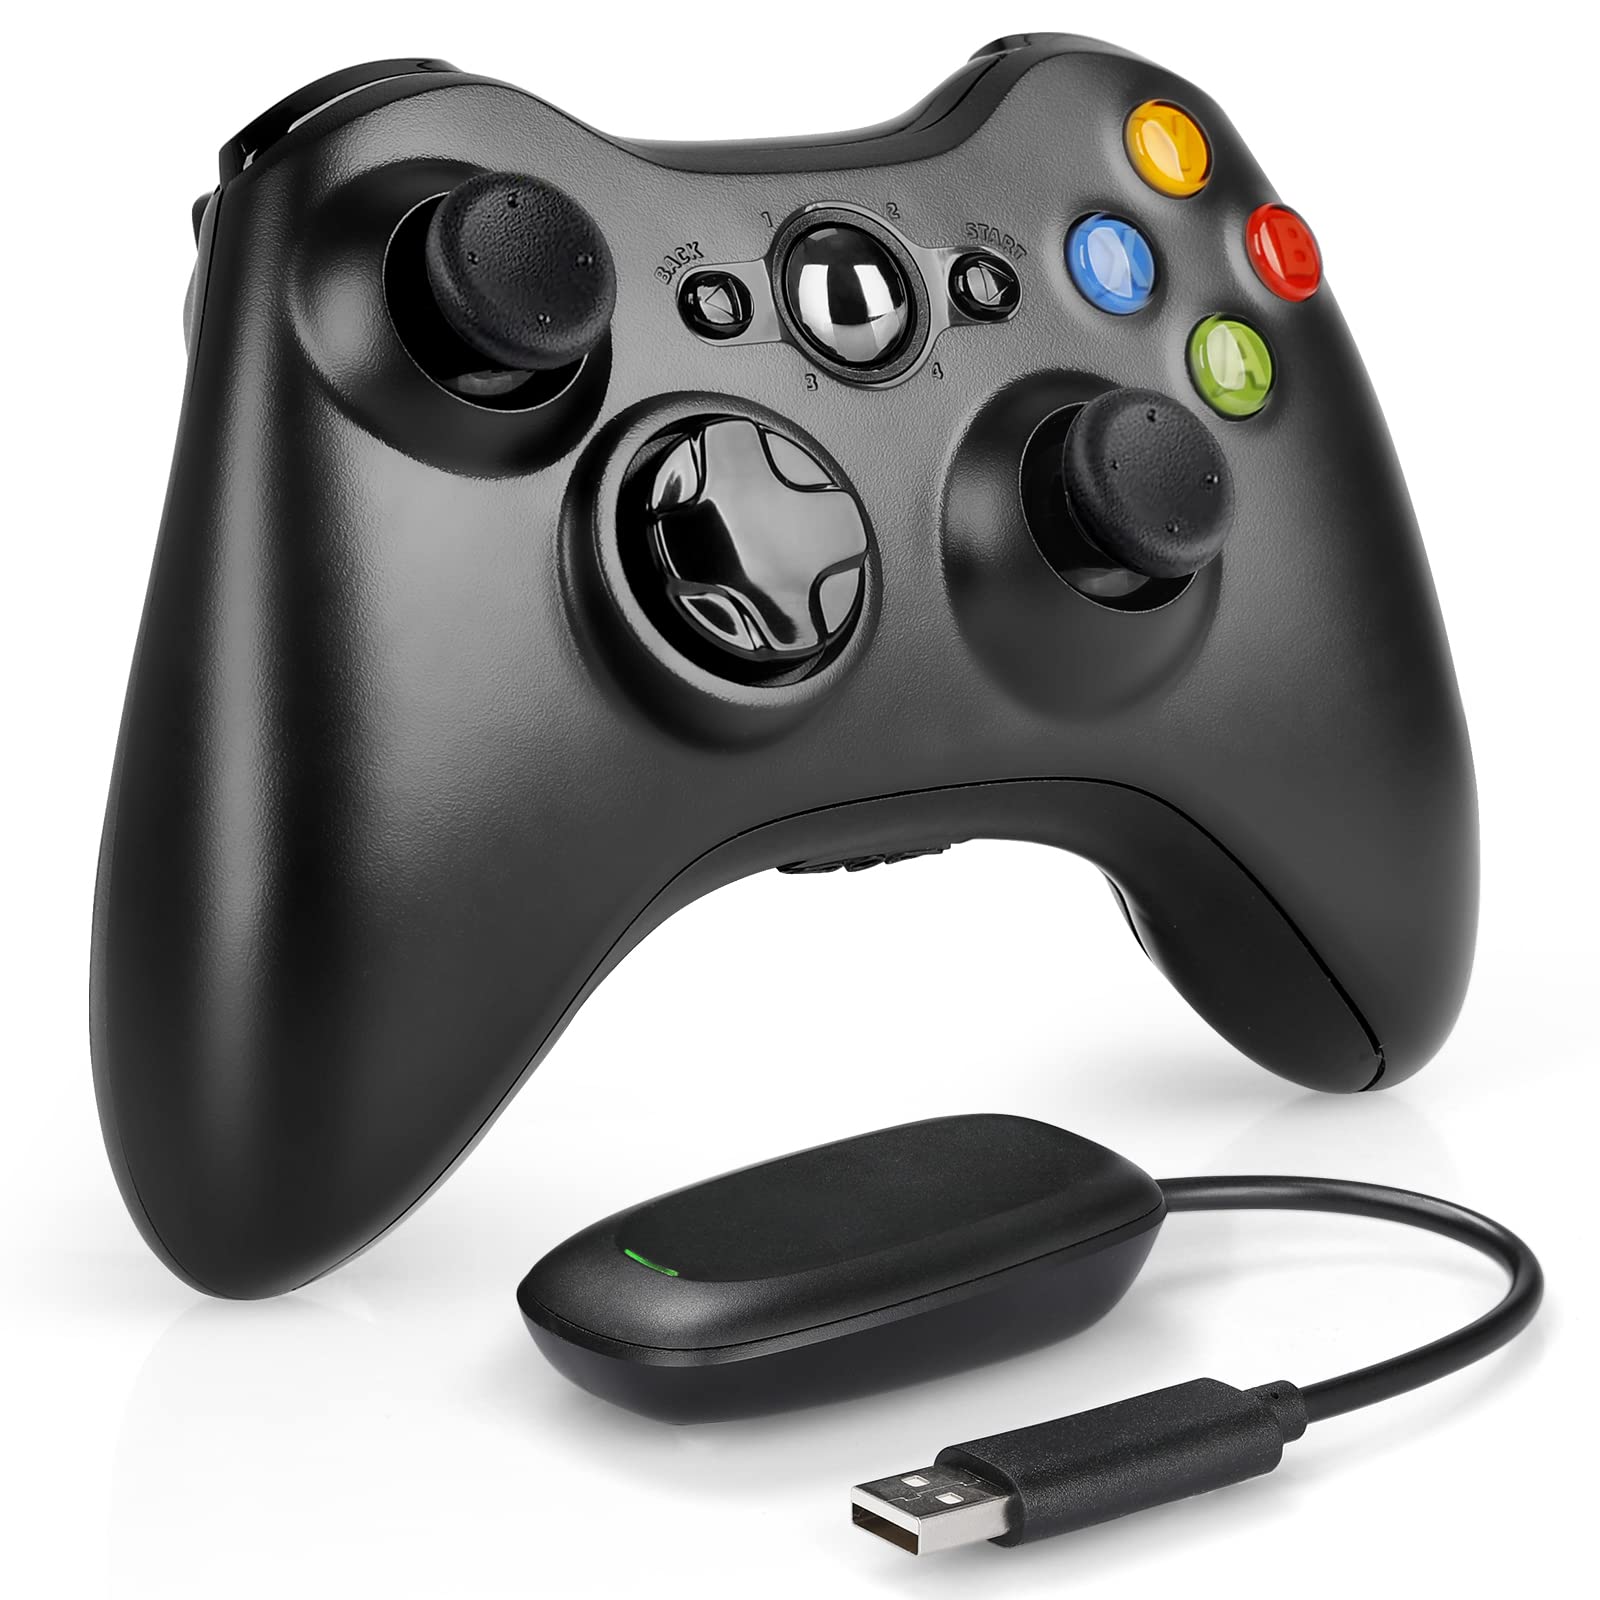 Guía definitiva: Cómo usar mando Xbox 360 en PC - Blog de Info-Computer